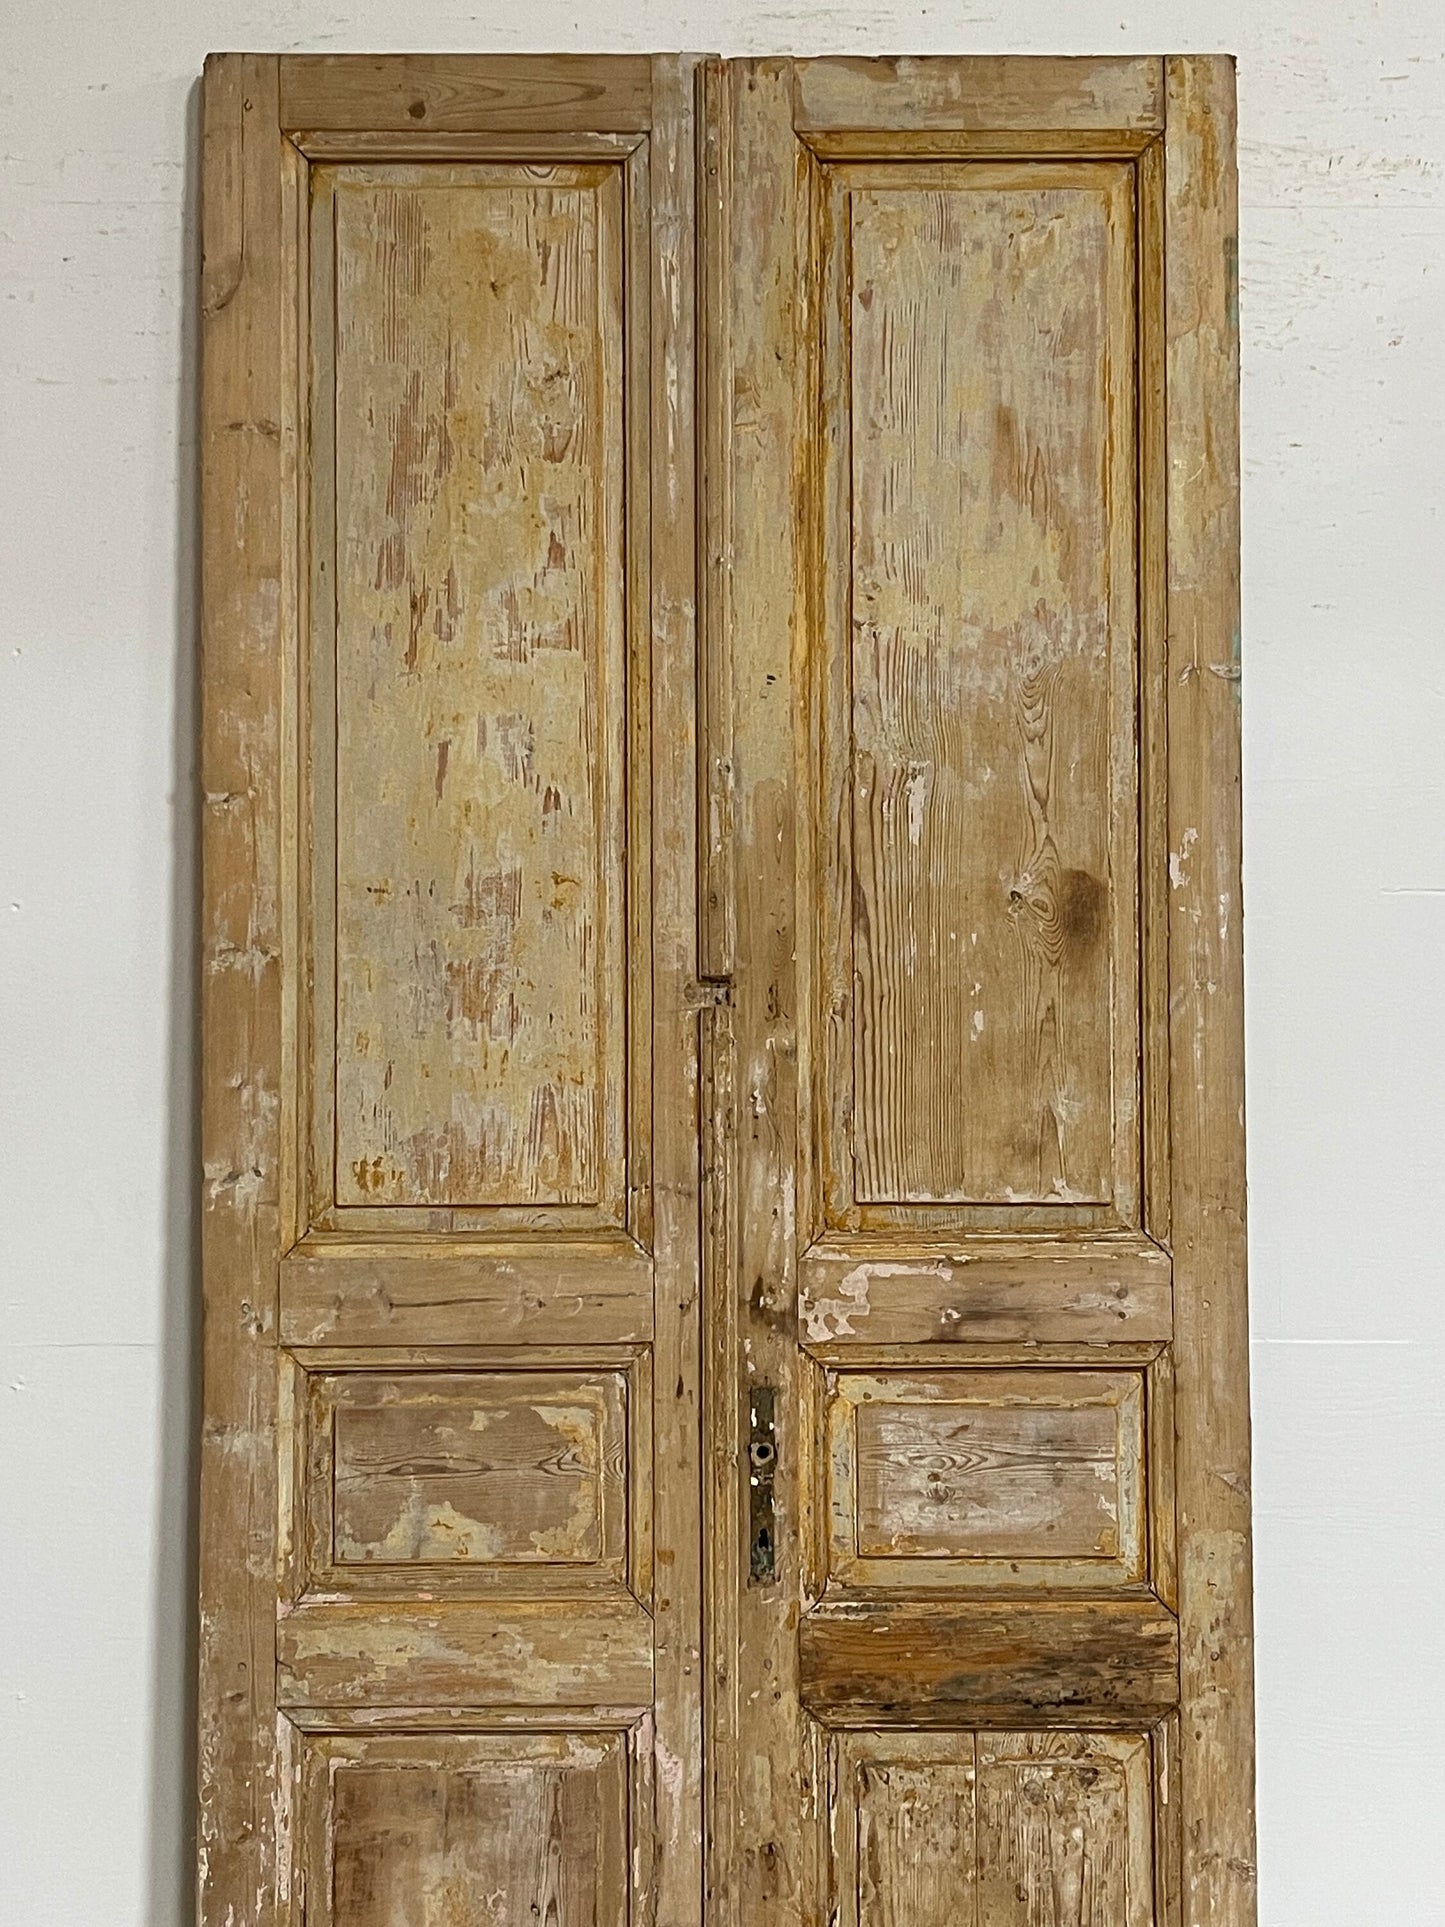 Antique French panel doors (101.75x42.75) G0196s